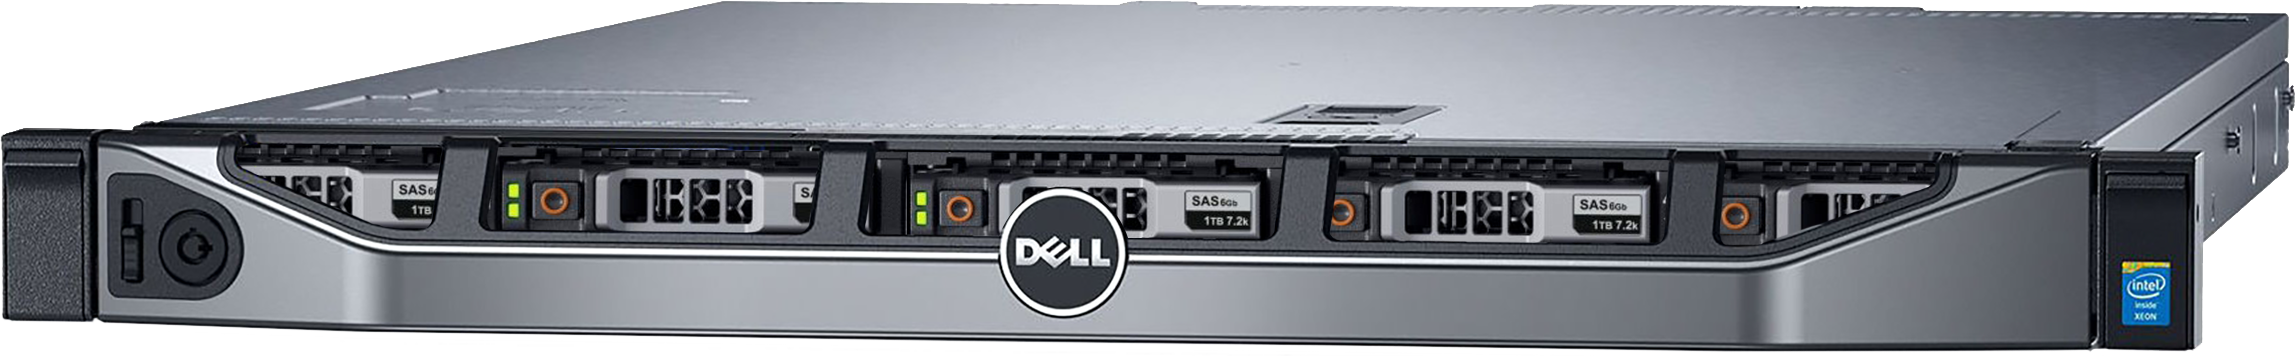 Аренда физического сервера DELL R620 / 2 × E5-2620 v2 / 32 GB RAM / 2 x 480 GB SSD / H310